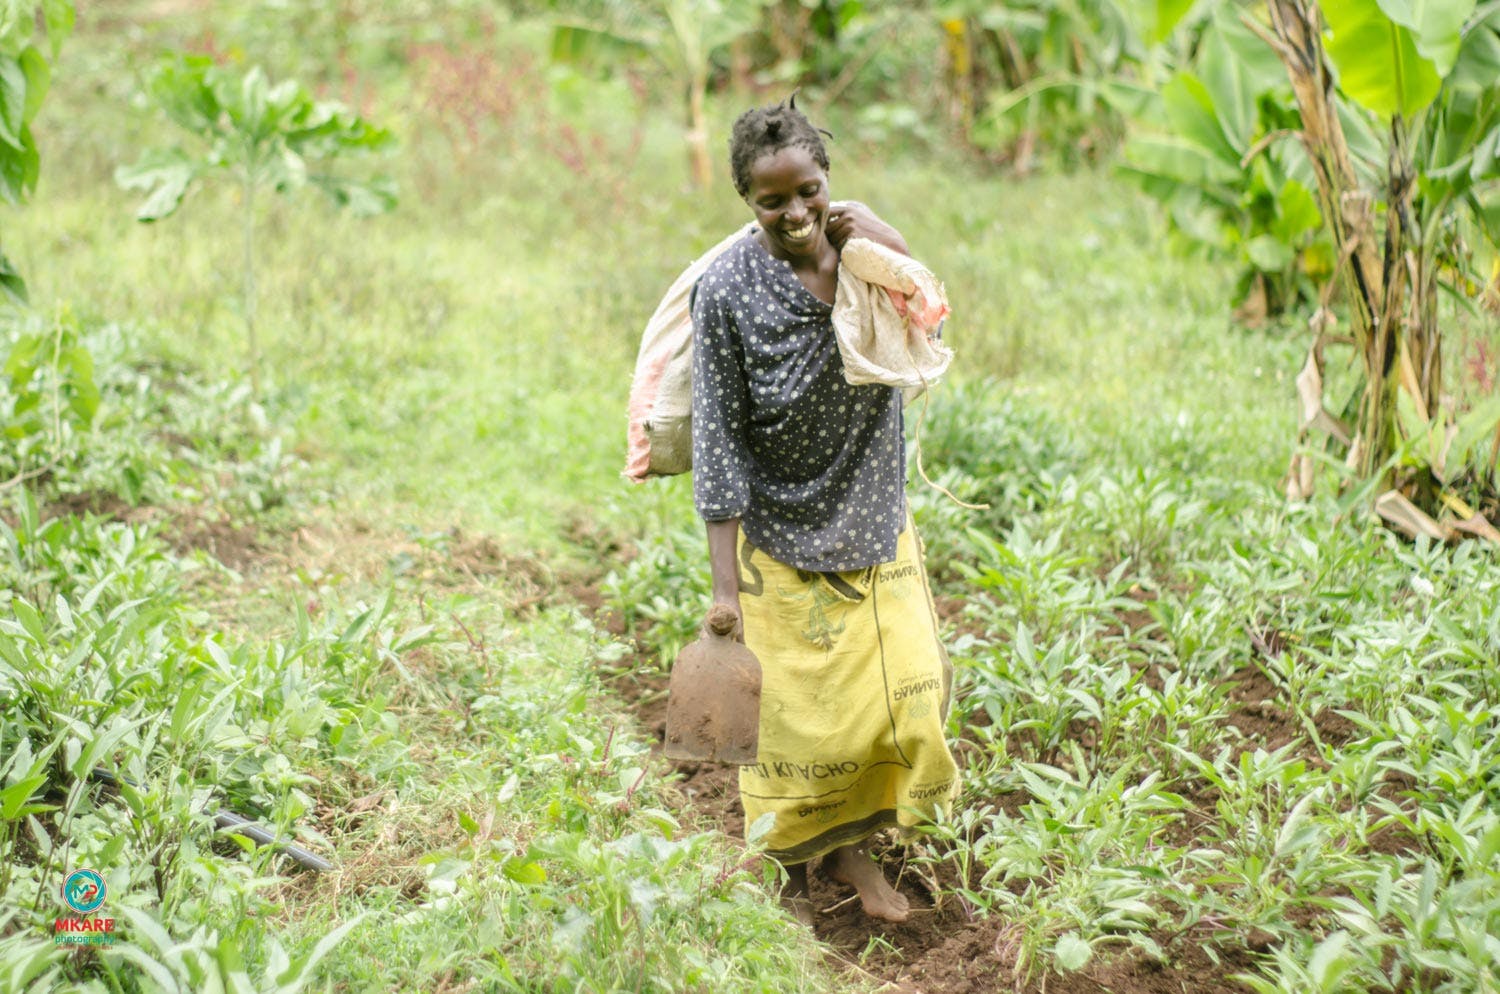 Kenyan farmer Ester Chebet walks through a field. She has dark skin, black hair, and wears a yellow skirt and blue shirt.